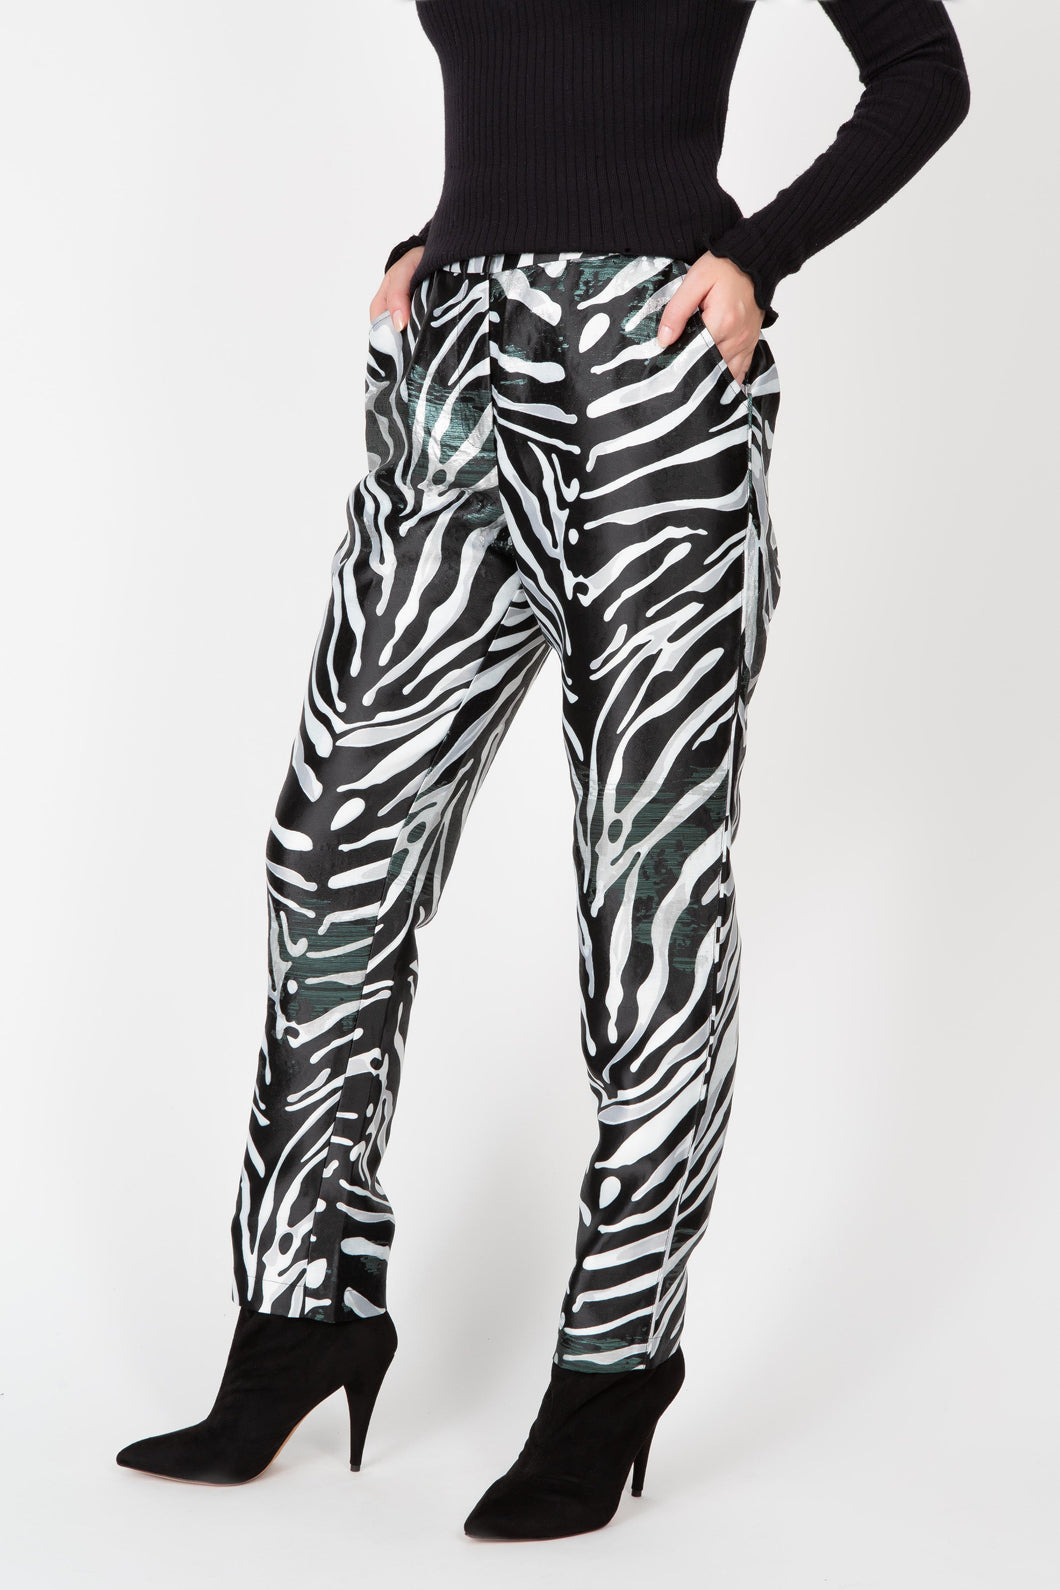 Party Girl Zebra Pant